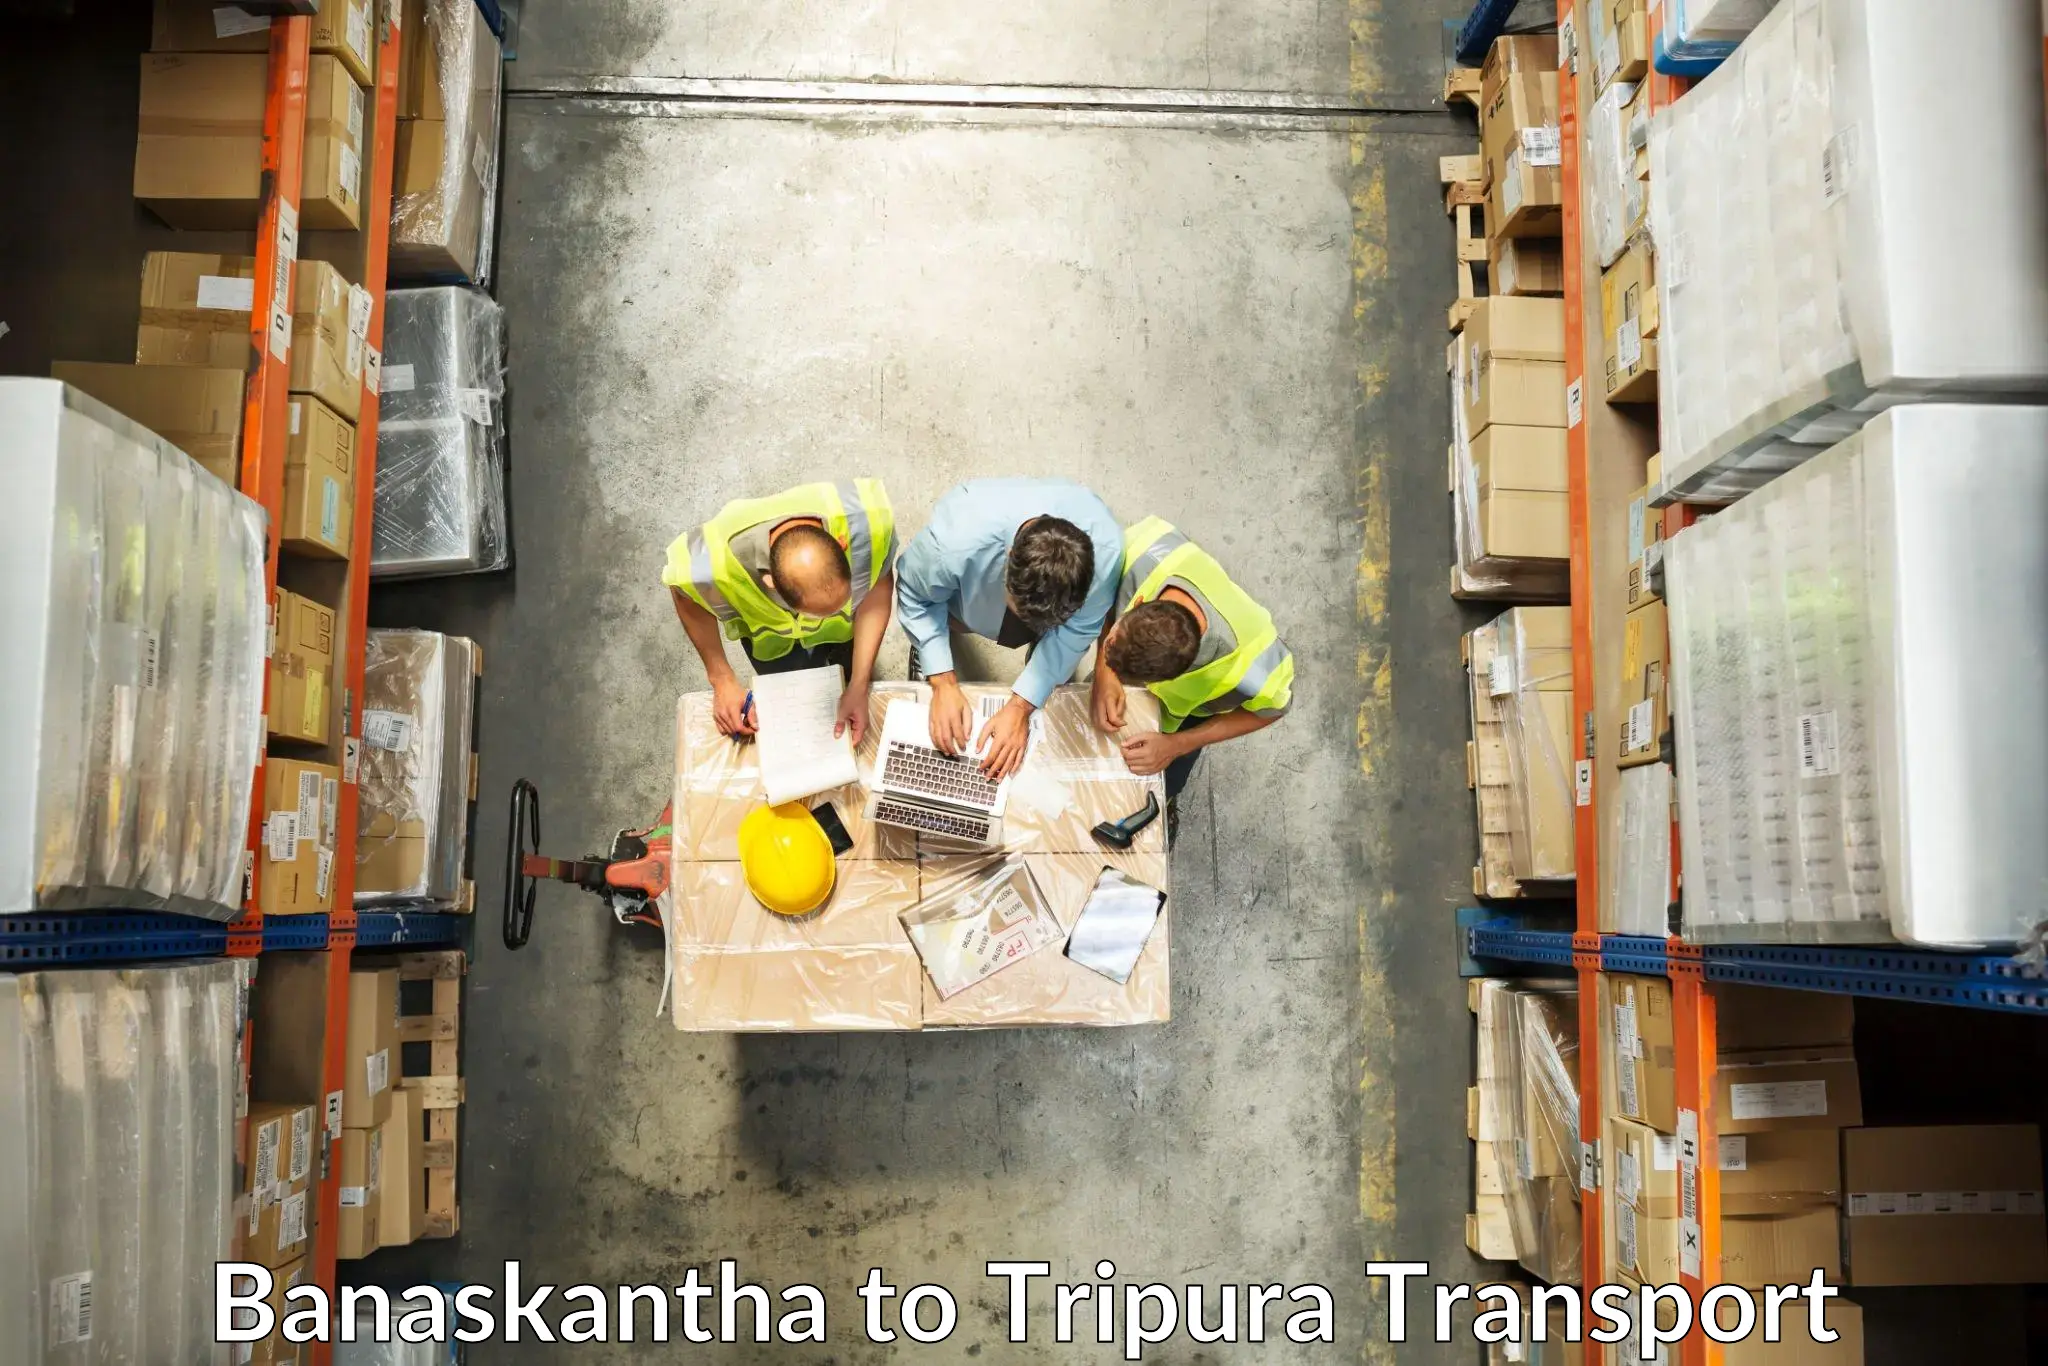 Cargo transportation services Banaskantha to Udaipur Tripura